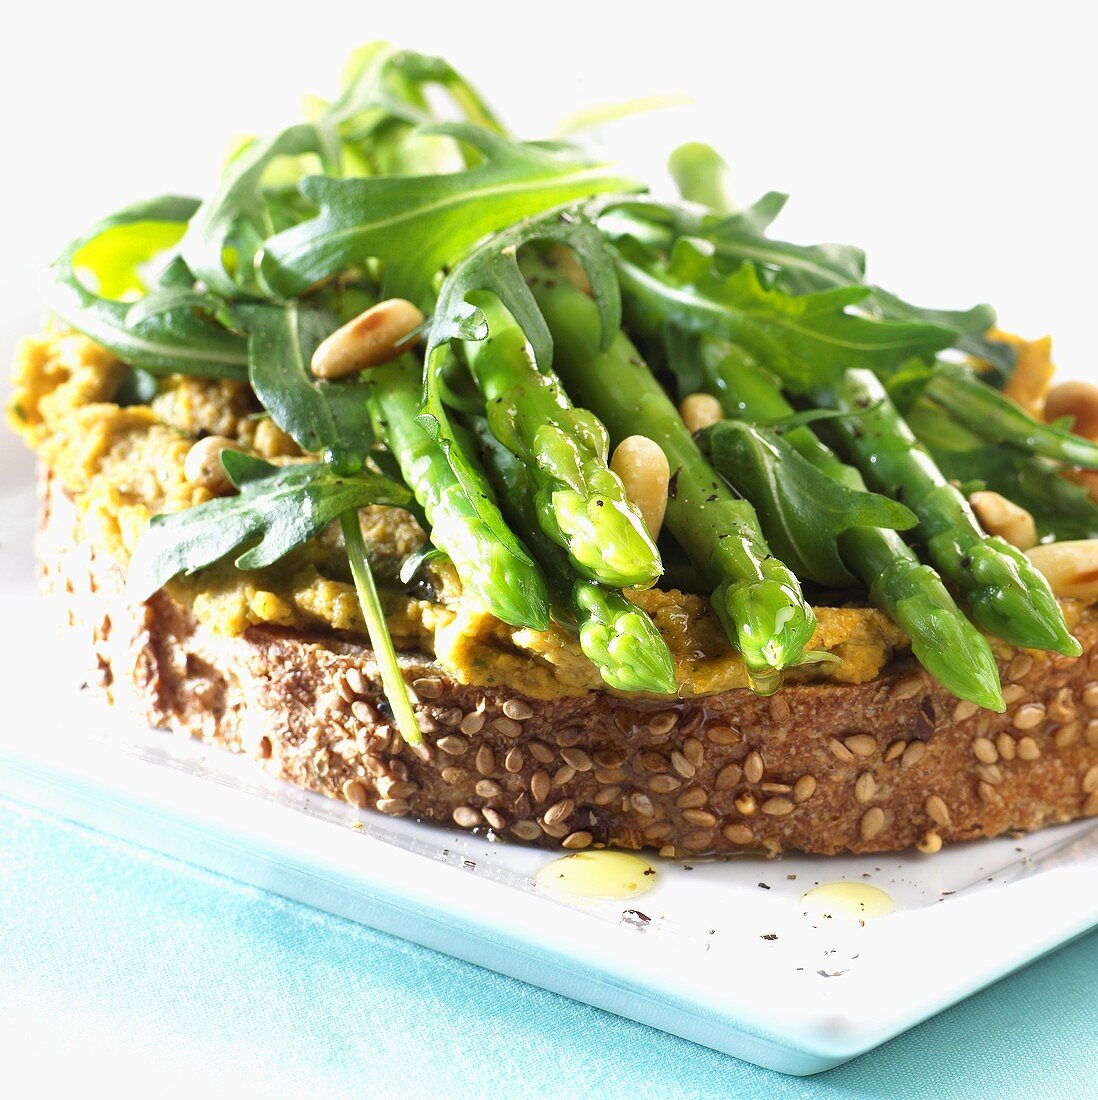 Green asparagus, rocket, pine nuts & hummus on sesame bread